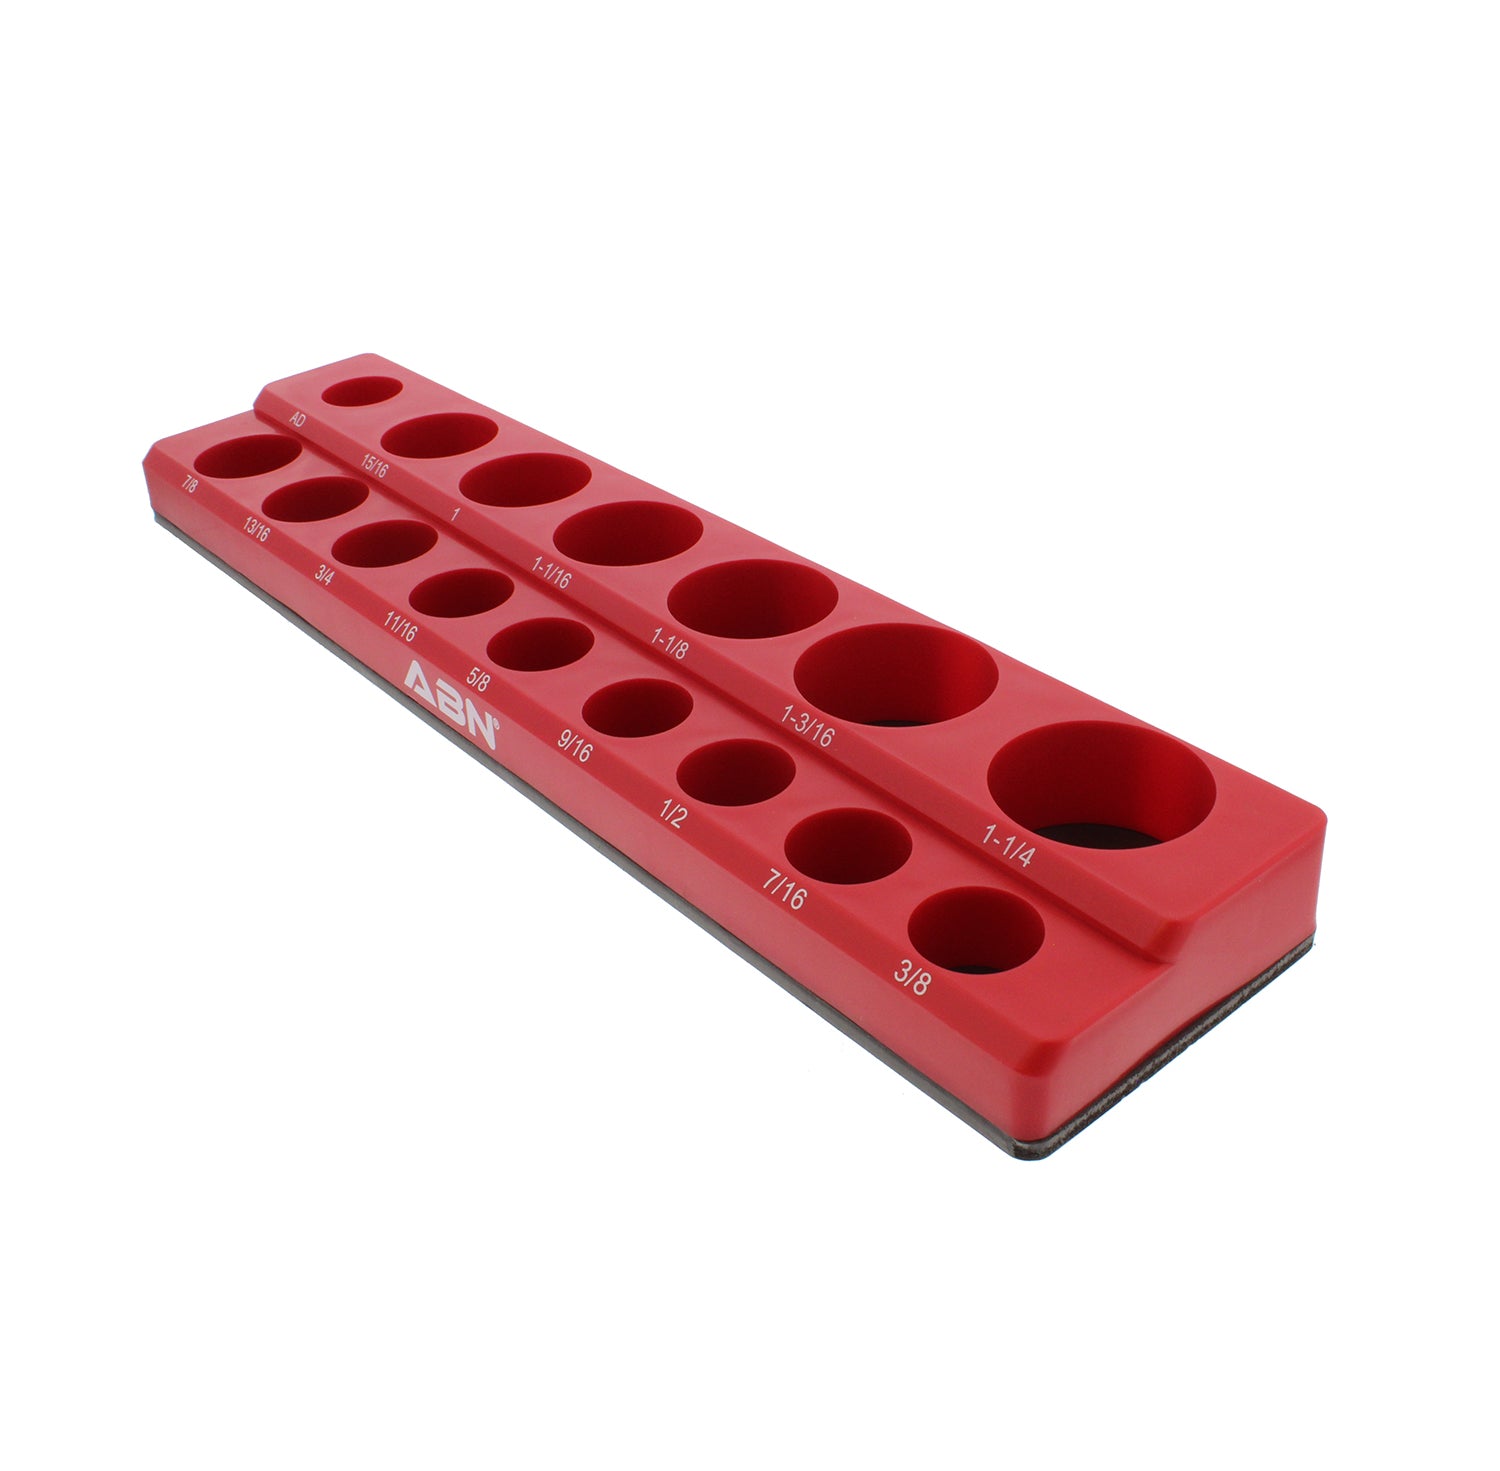 Magnetic Socket Organizer Tray – SAE 1/2” Inch 16 Socket Holder, Red